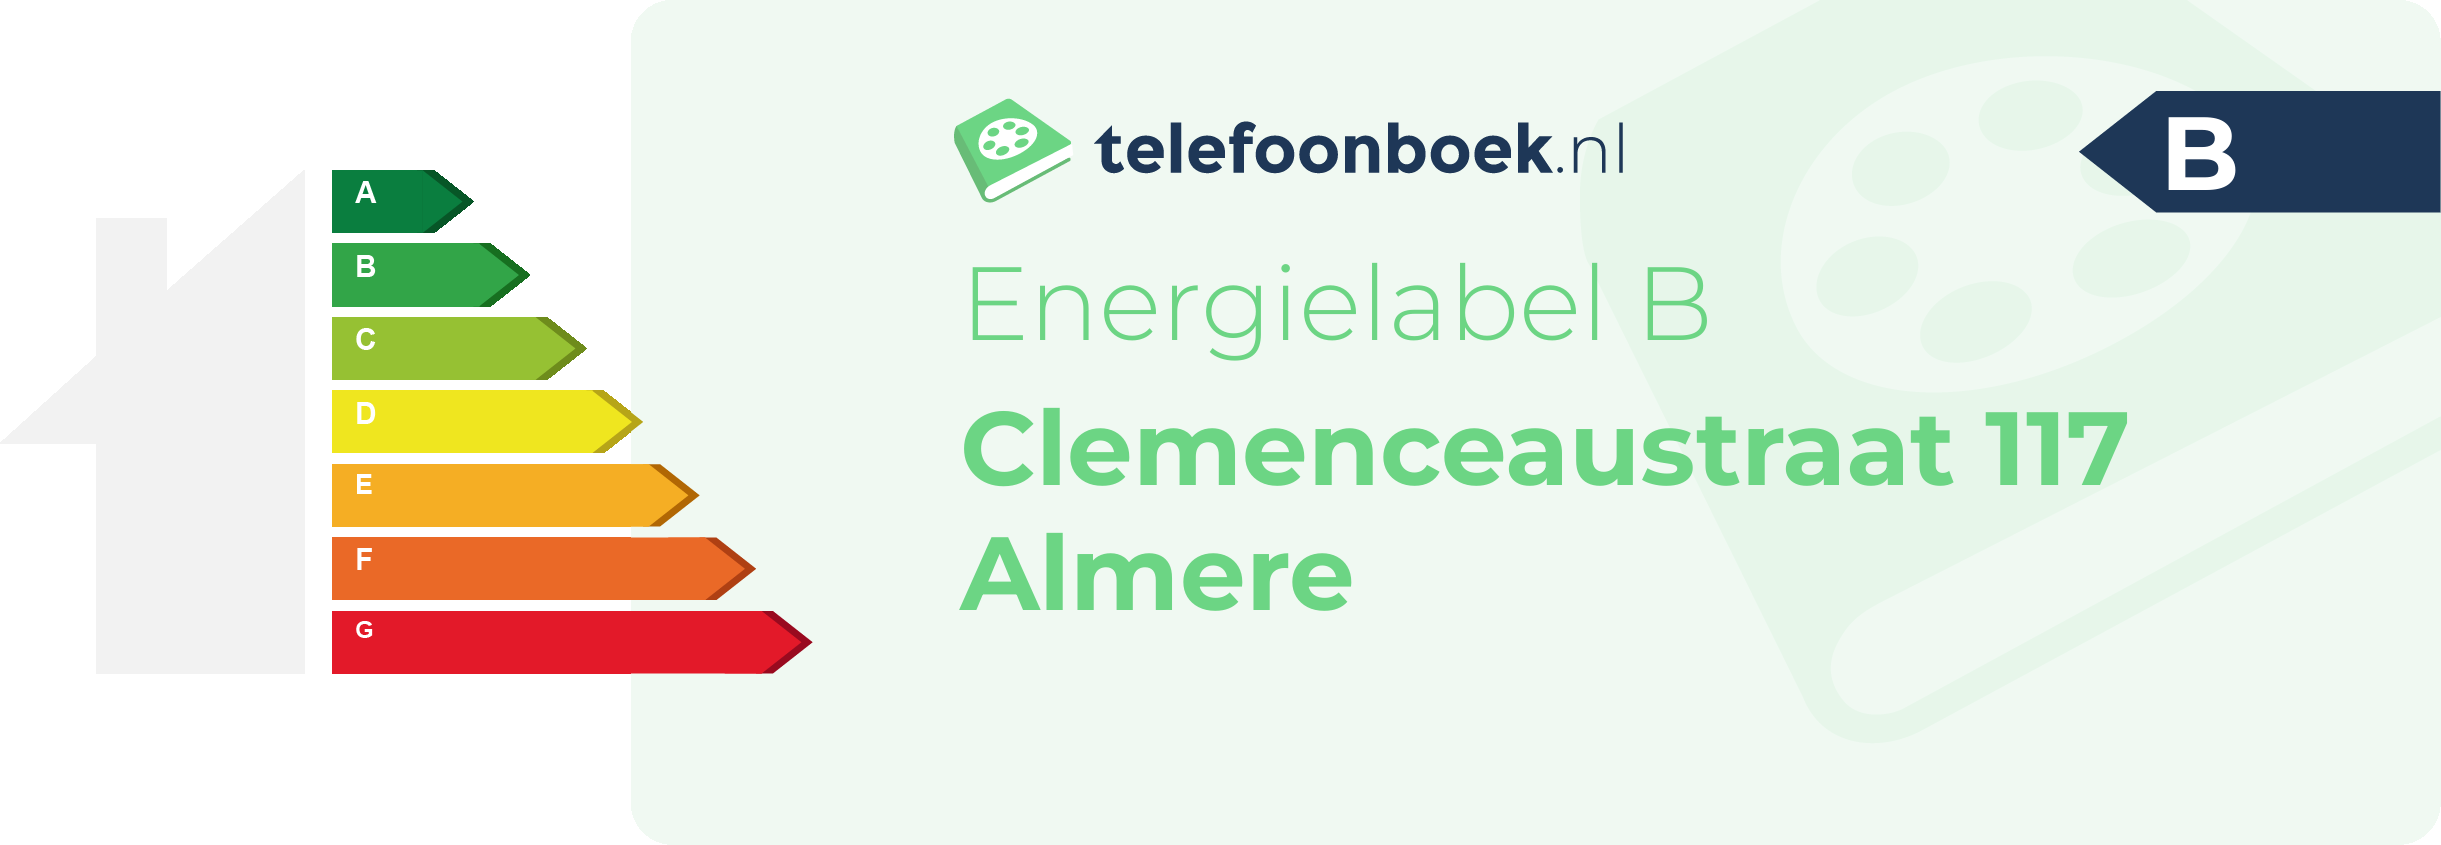 Energielabel Clemenceaustraat 117 Almere